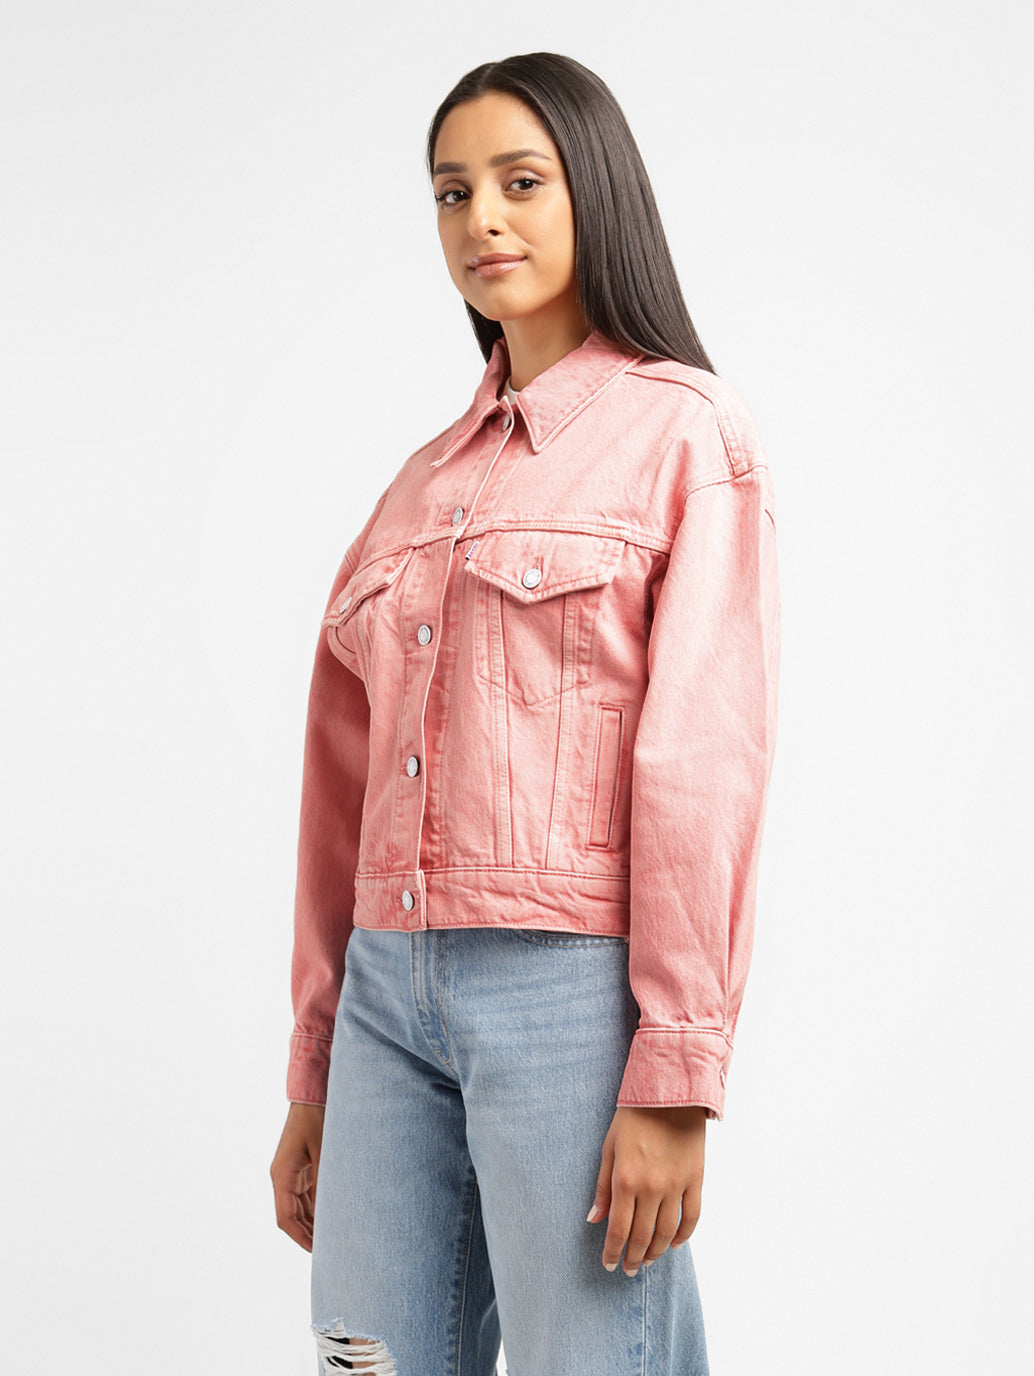 Levi's x Deepika Padukone Solid Peach Spread Collar Jacket